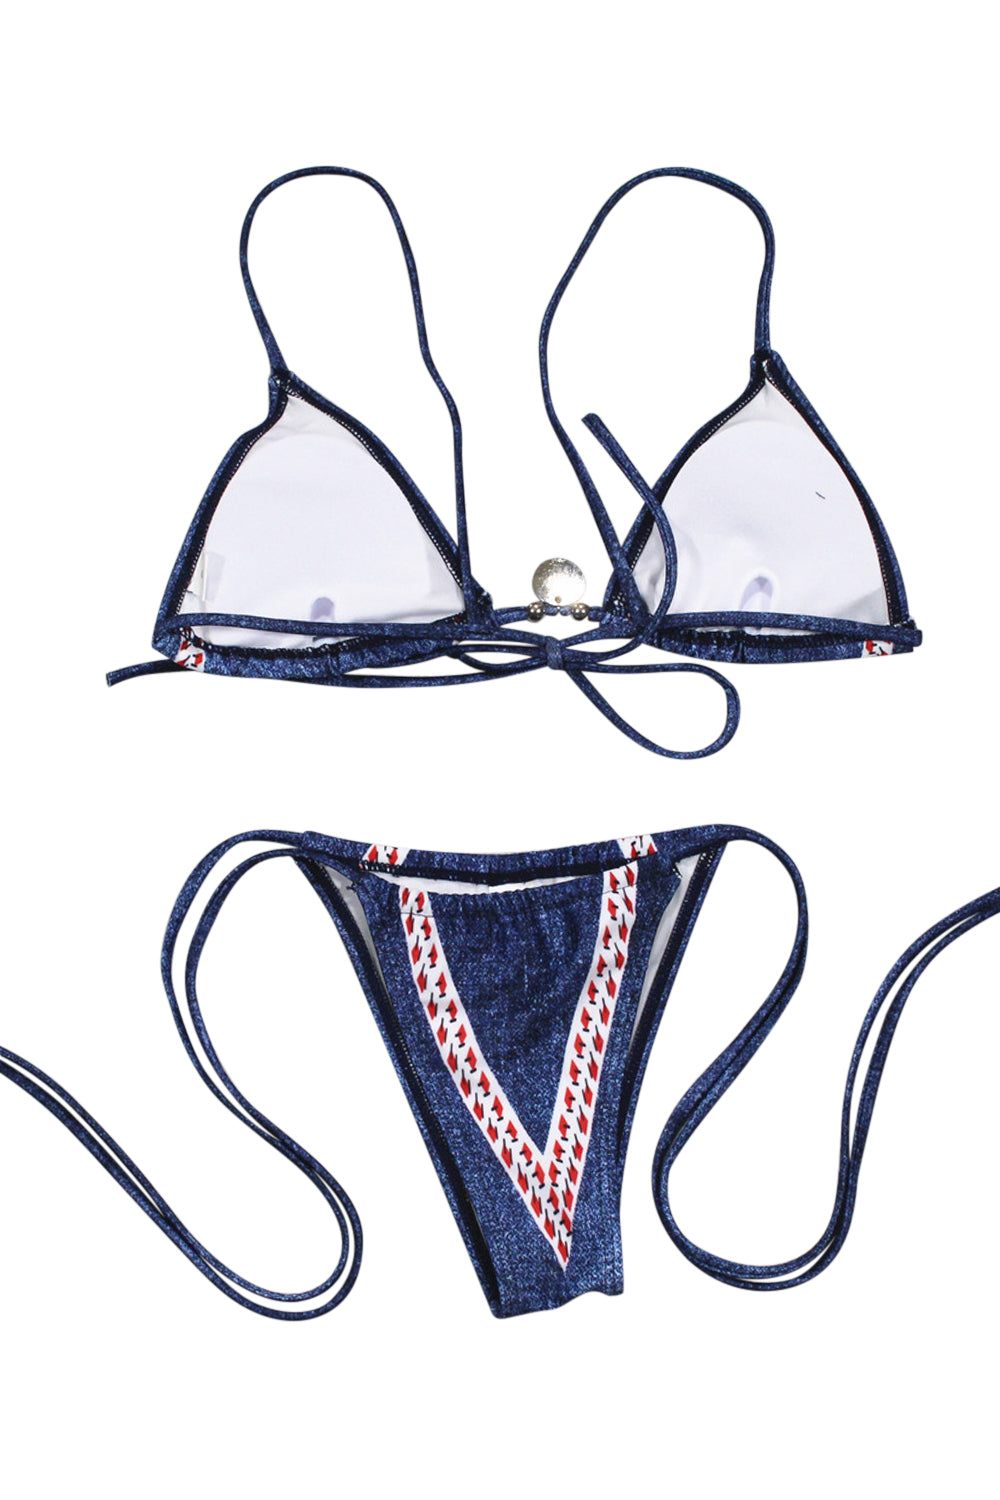 Iyasson Blue Denim Fabric Triangle Top Bikini Sets